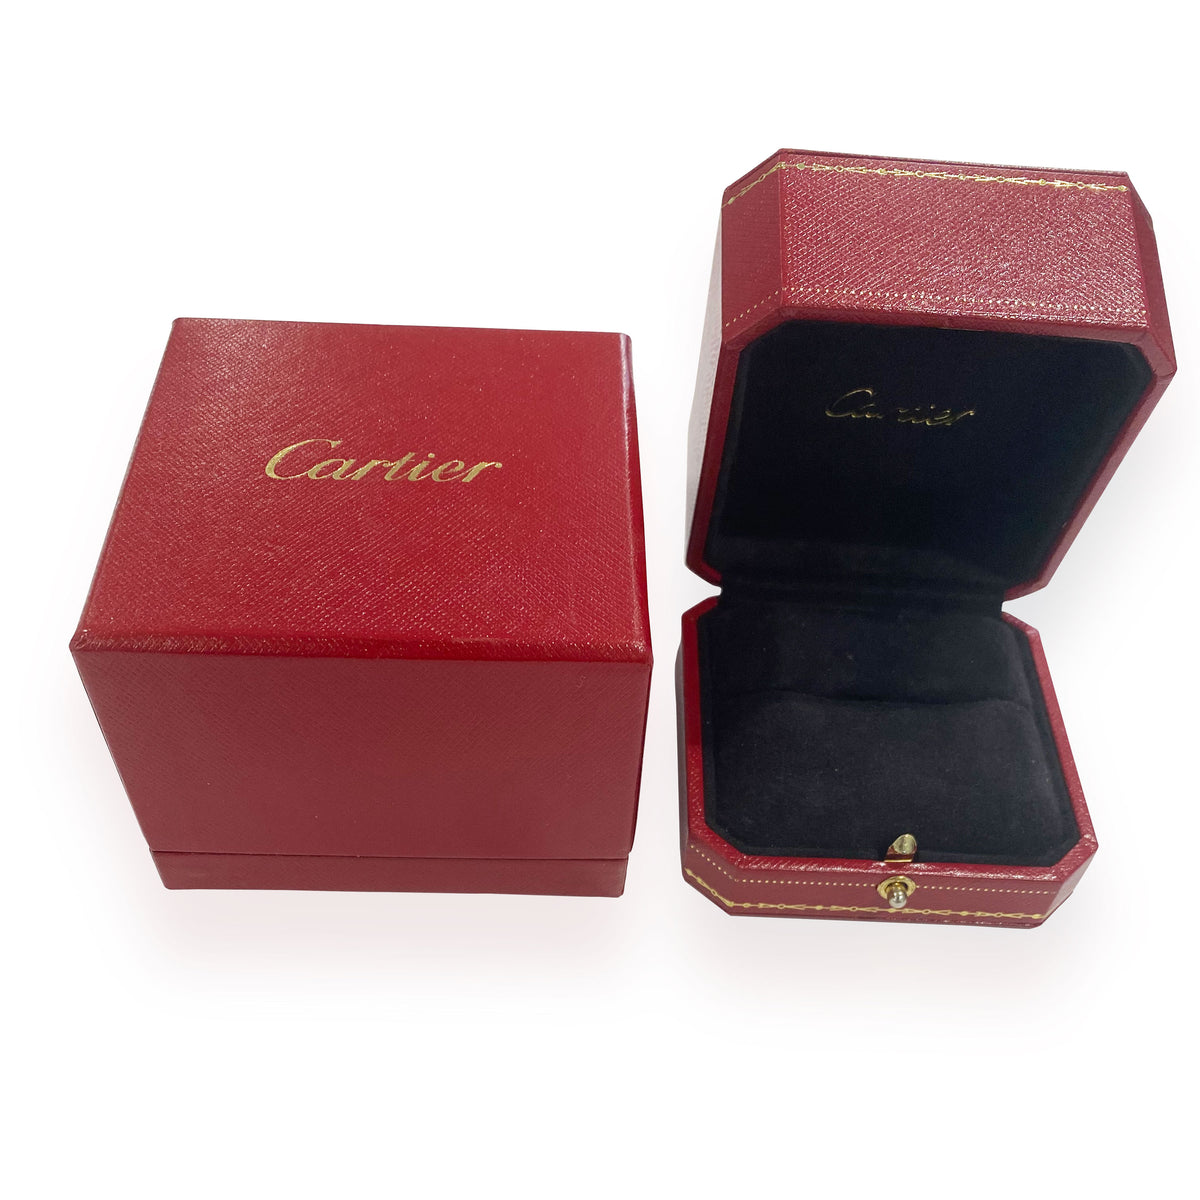 Cartier Diadea Entremblant Diamond Ring in 18K Yellow Gold 1.70 CTW